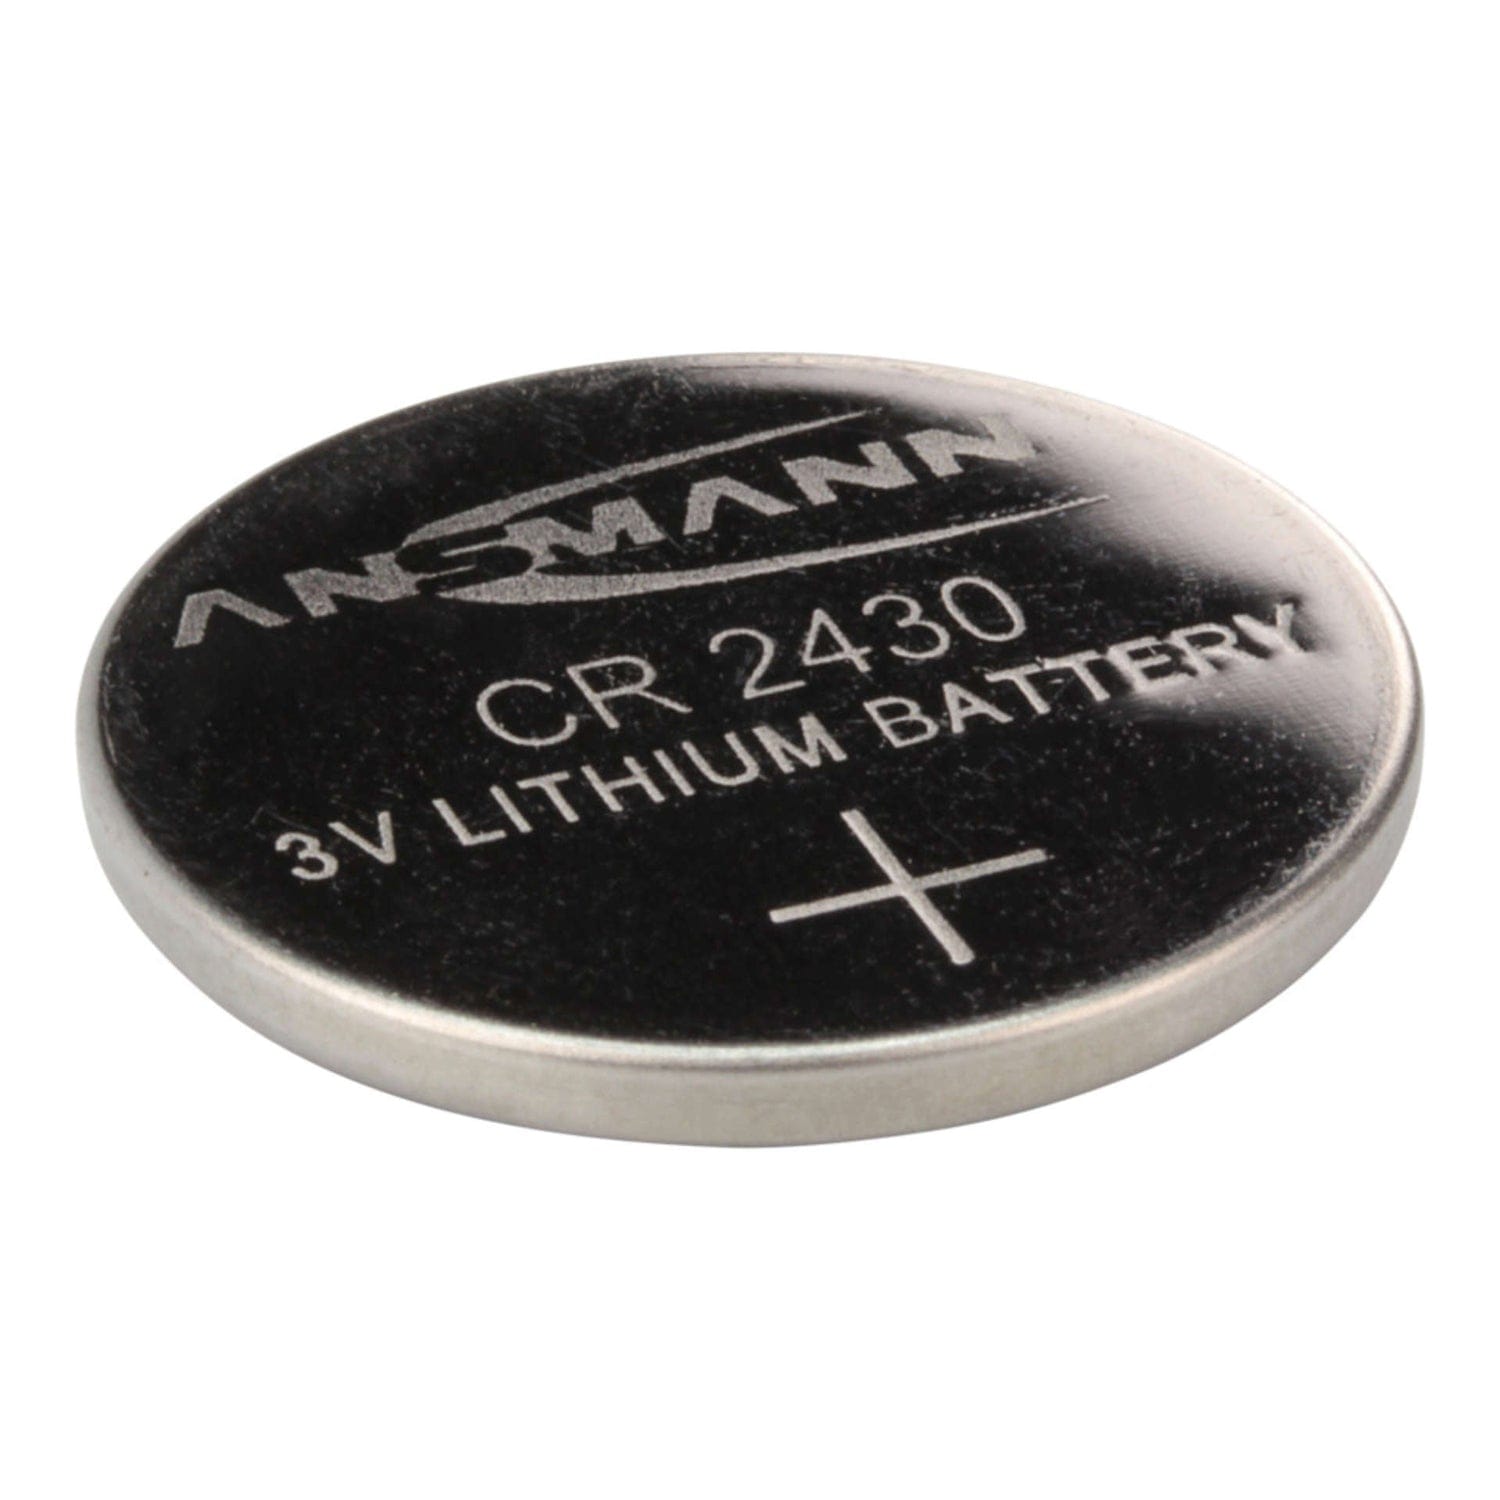 CR2430 3V Lithium Coin Cell Battery